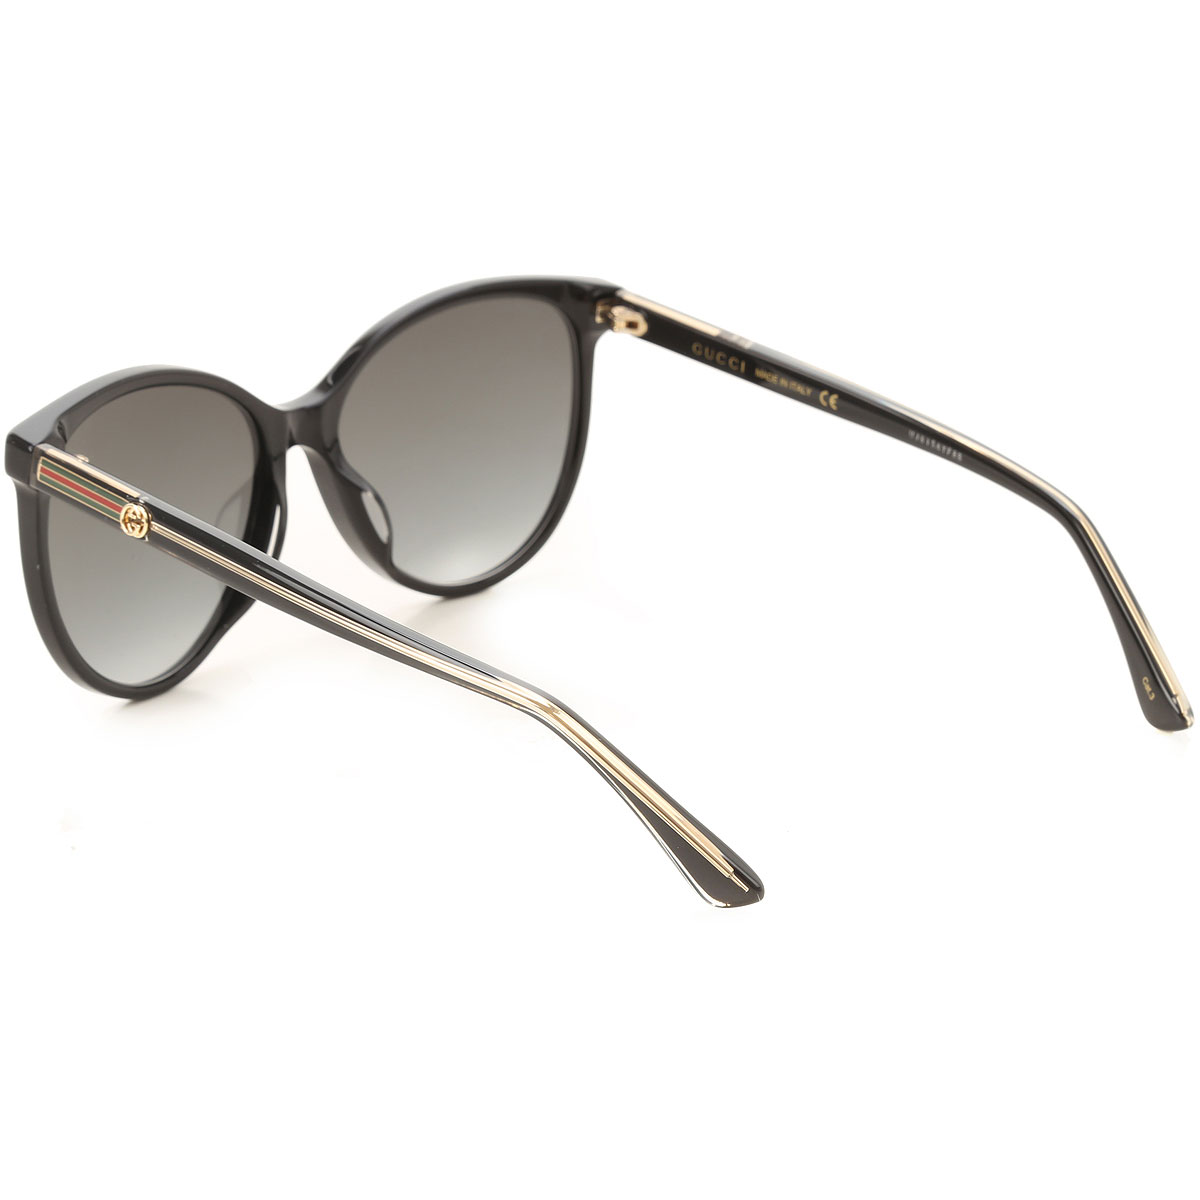 Sunglasses Gucci, Style code: gg0377sk-001-N82